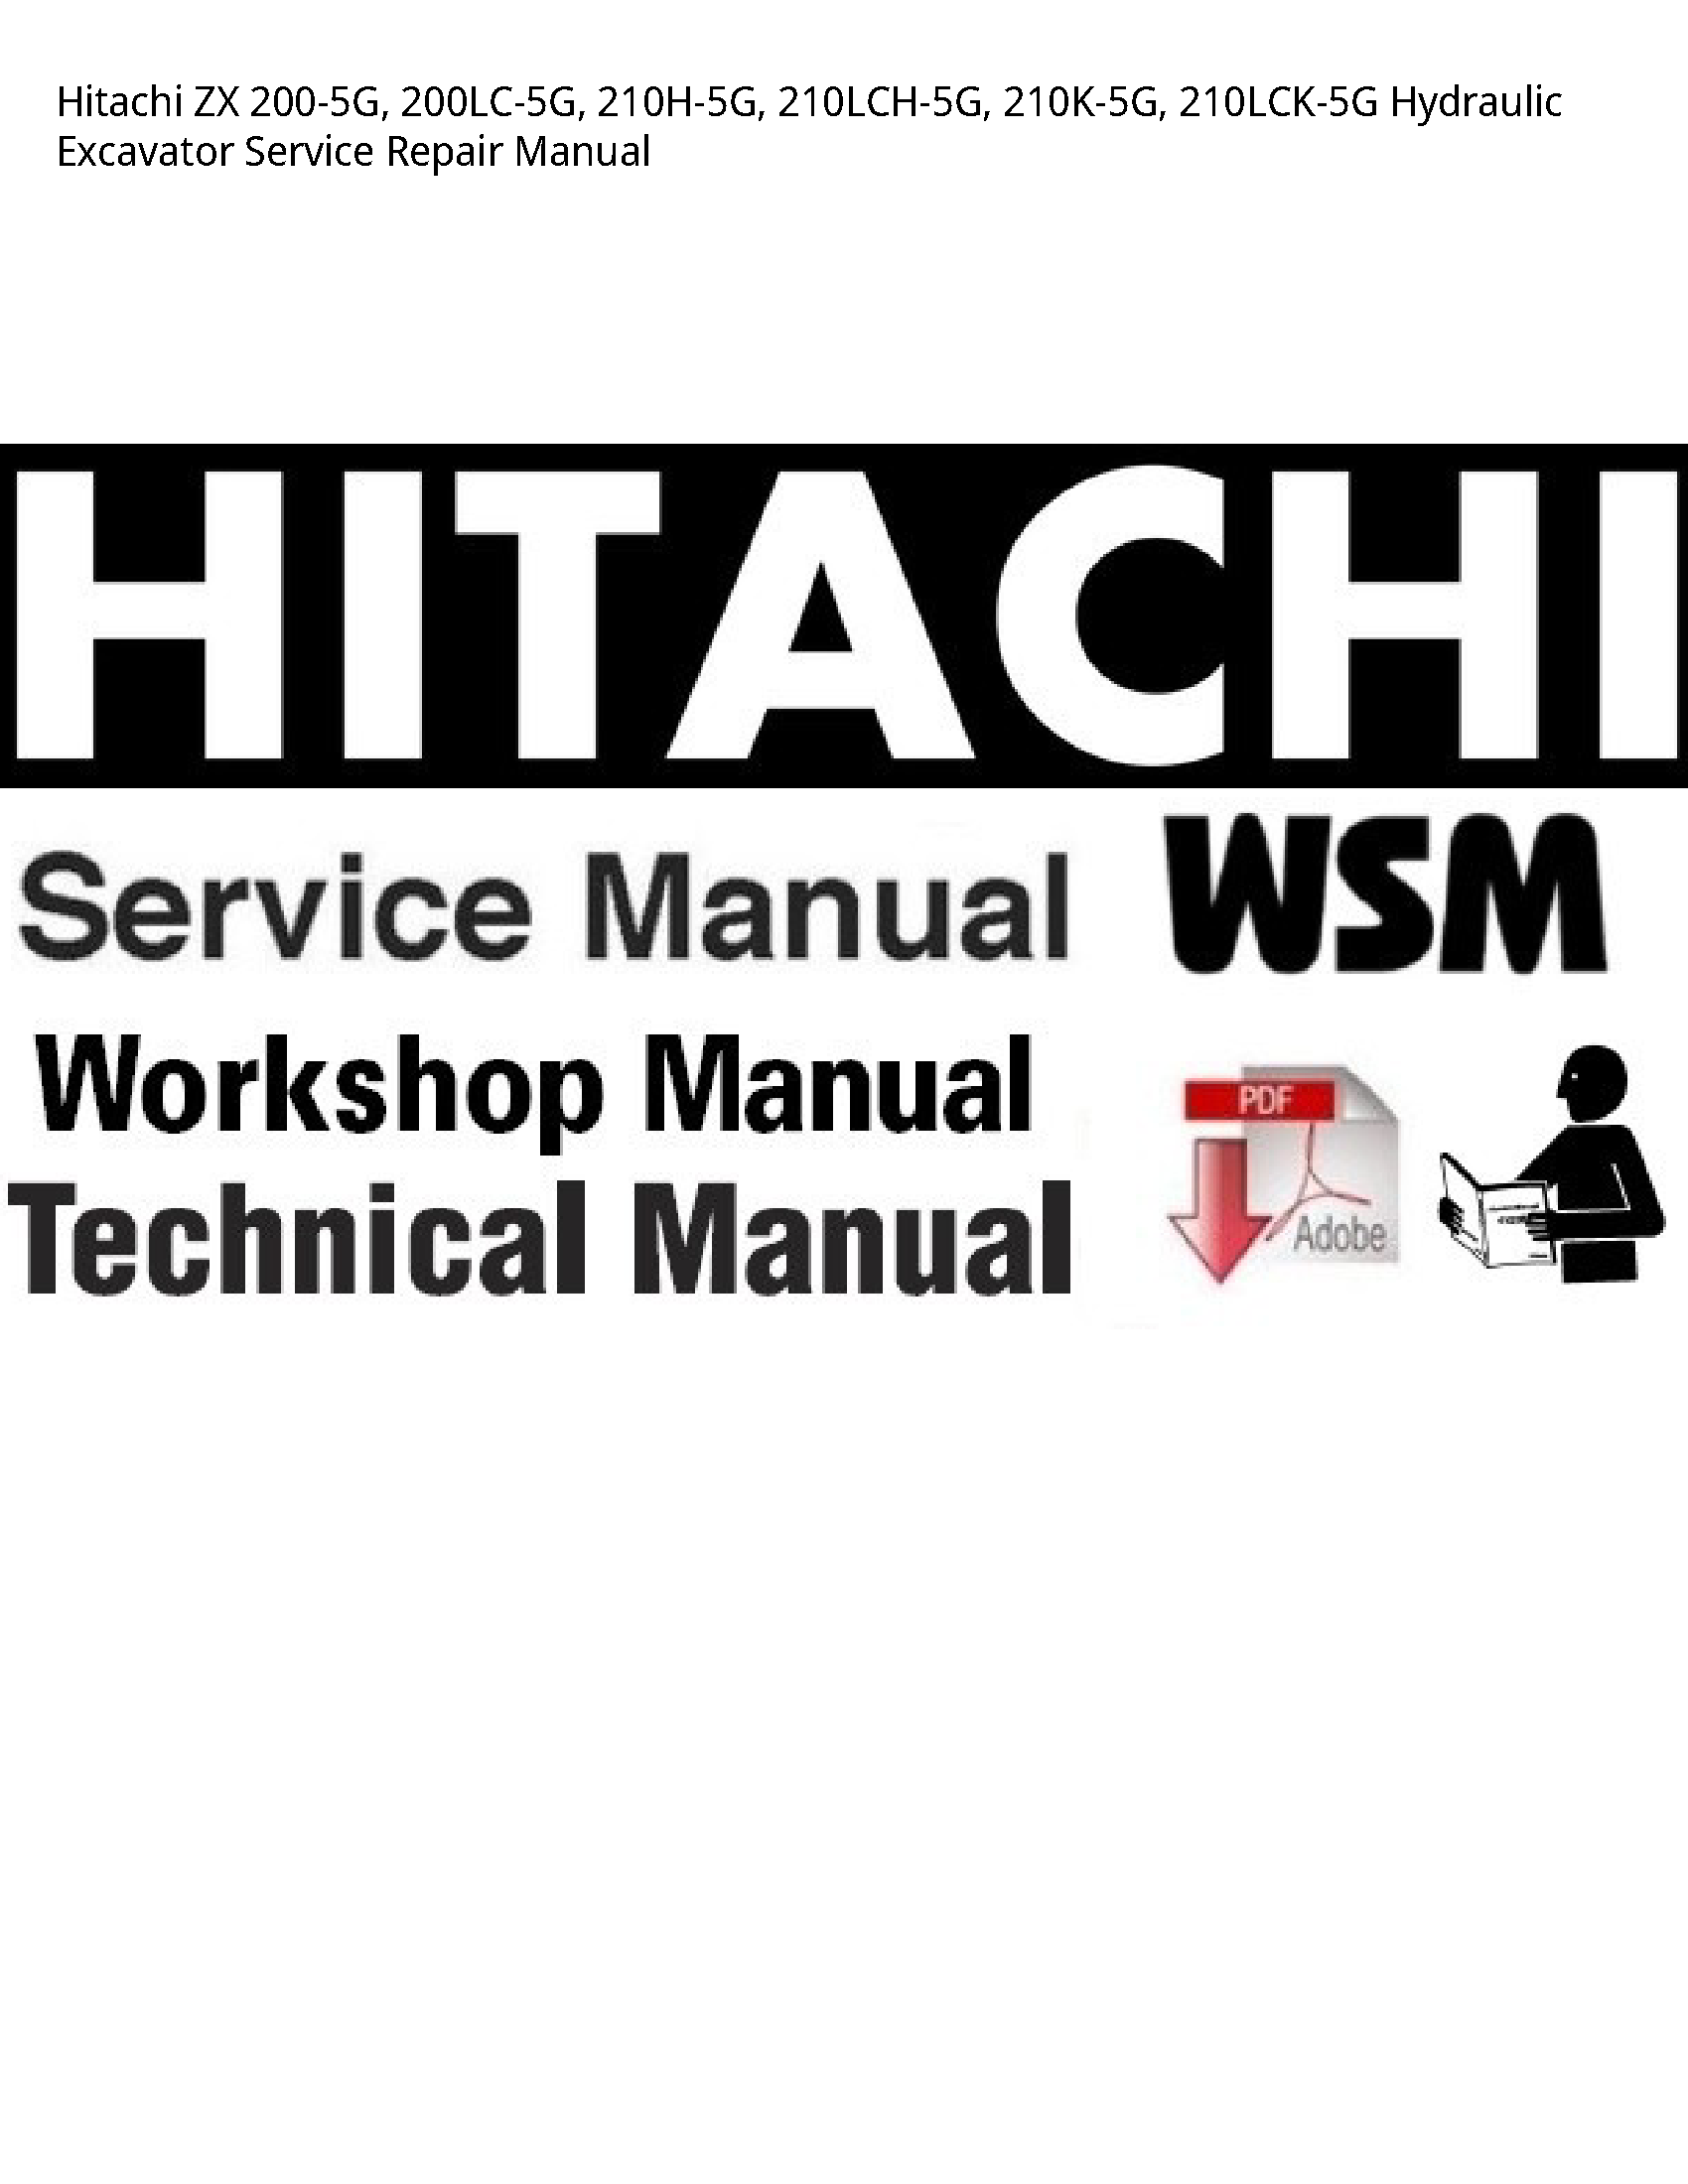 Hitachi 200-5G ZX Hydraulic Excavator manual